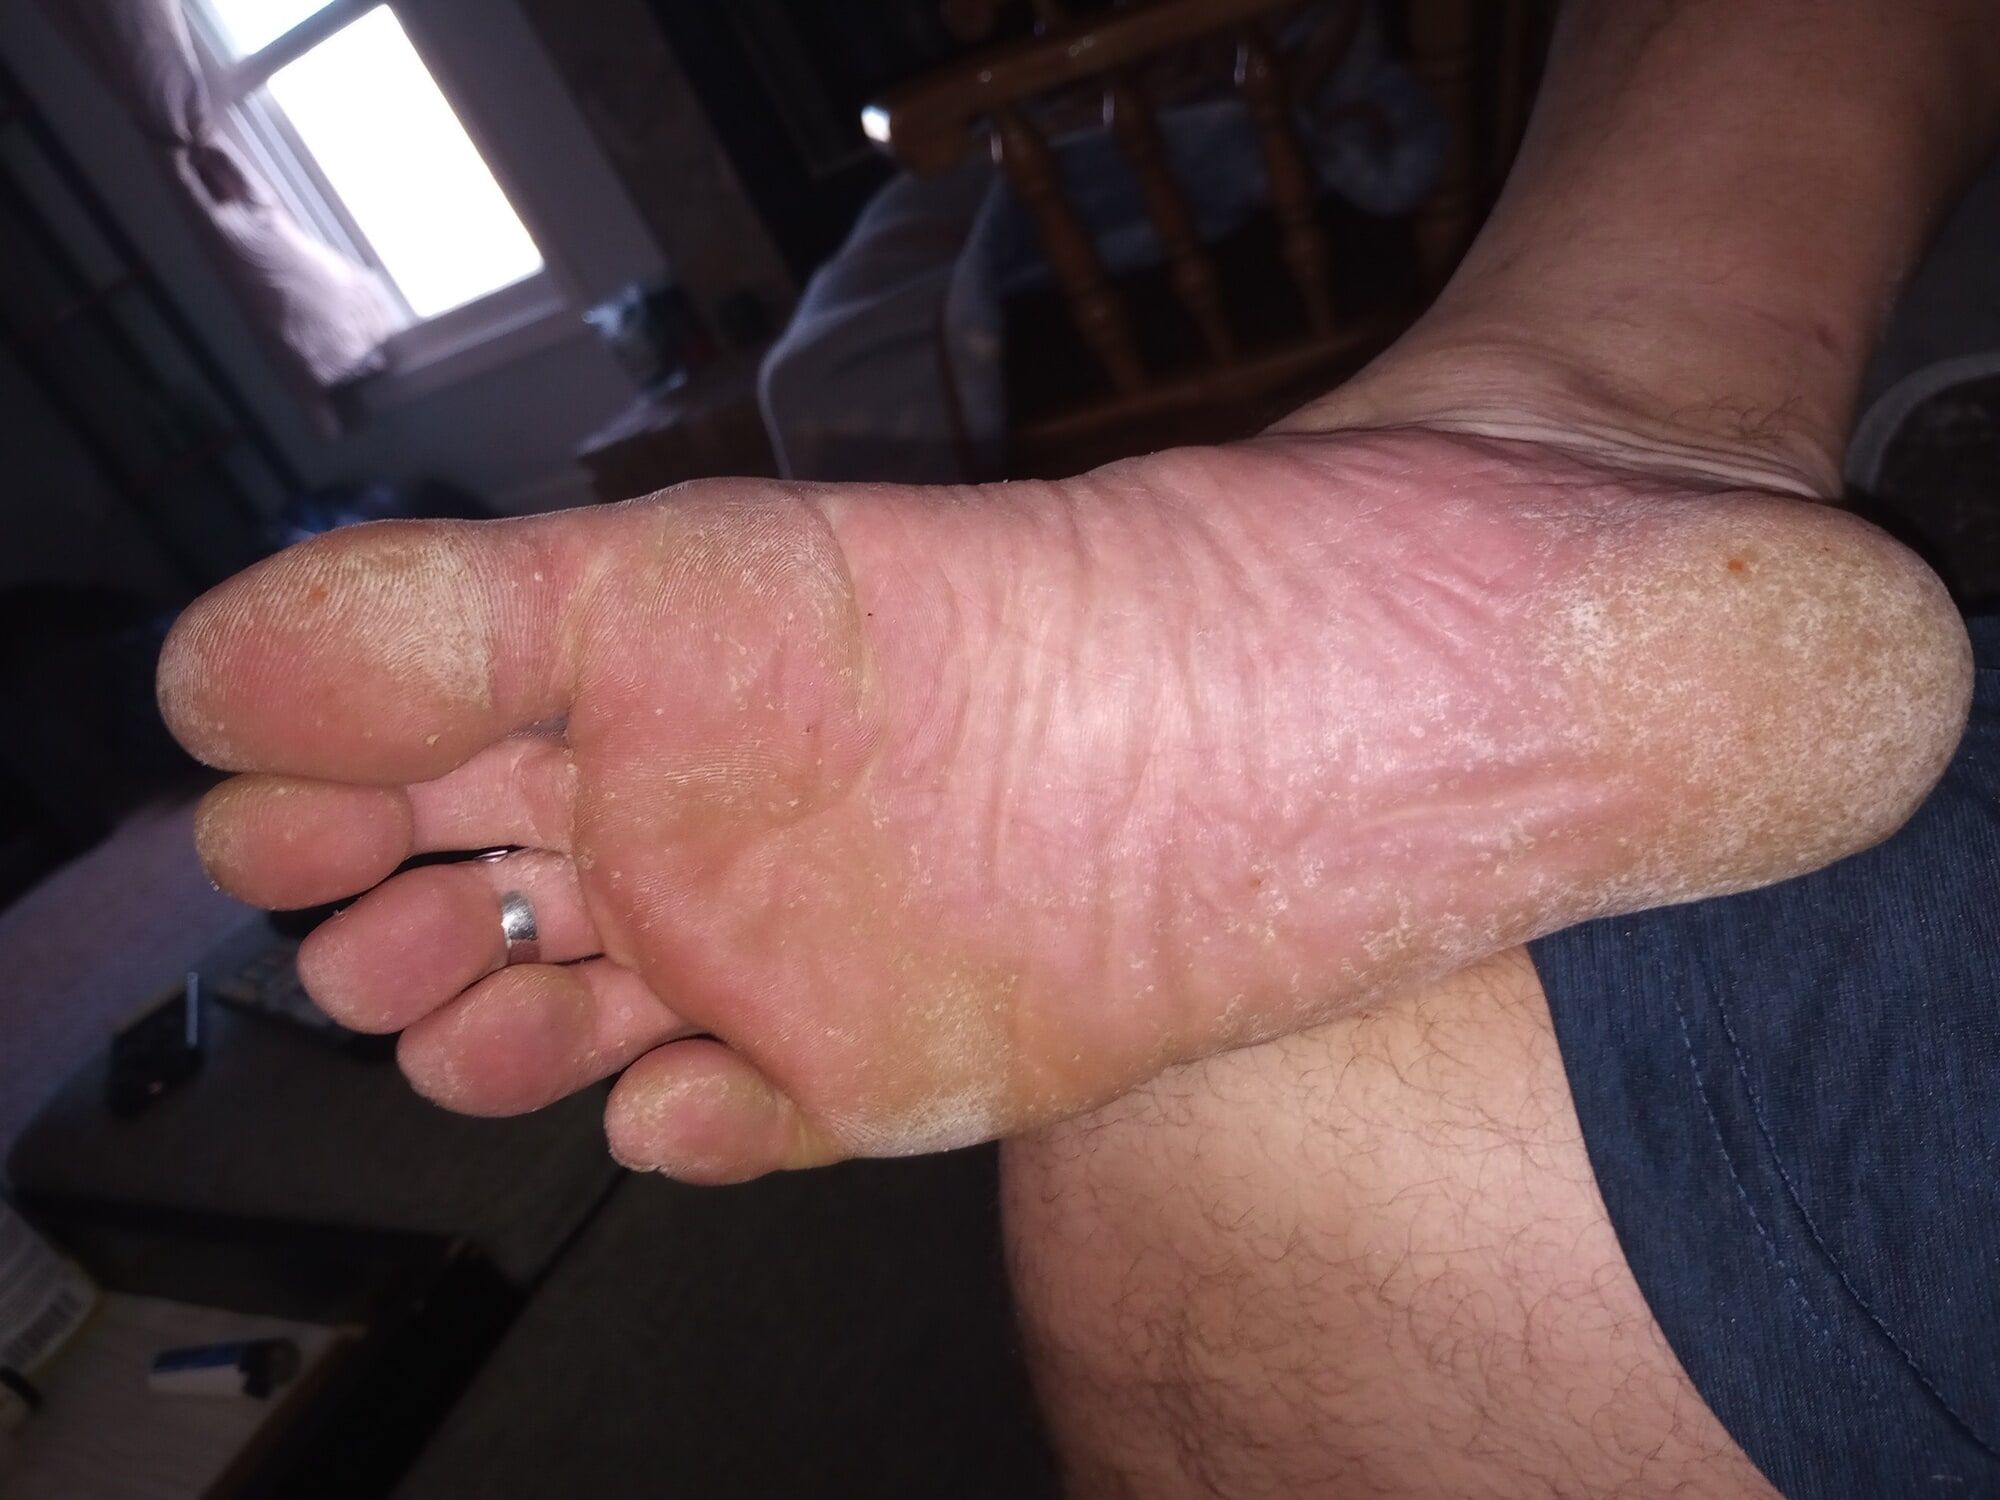 My rough Dirty Male Feet #4